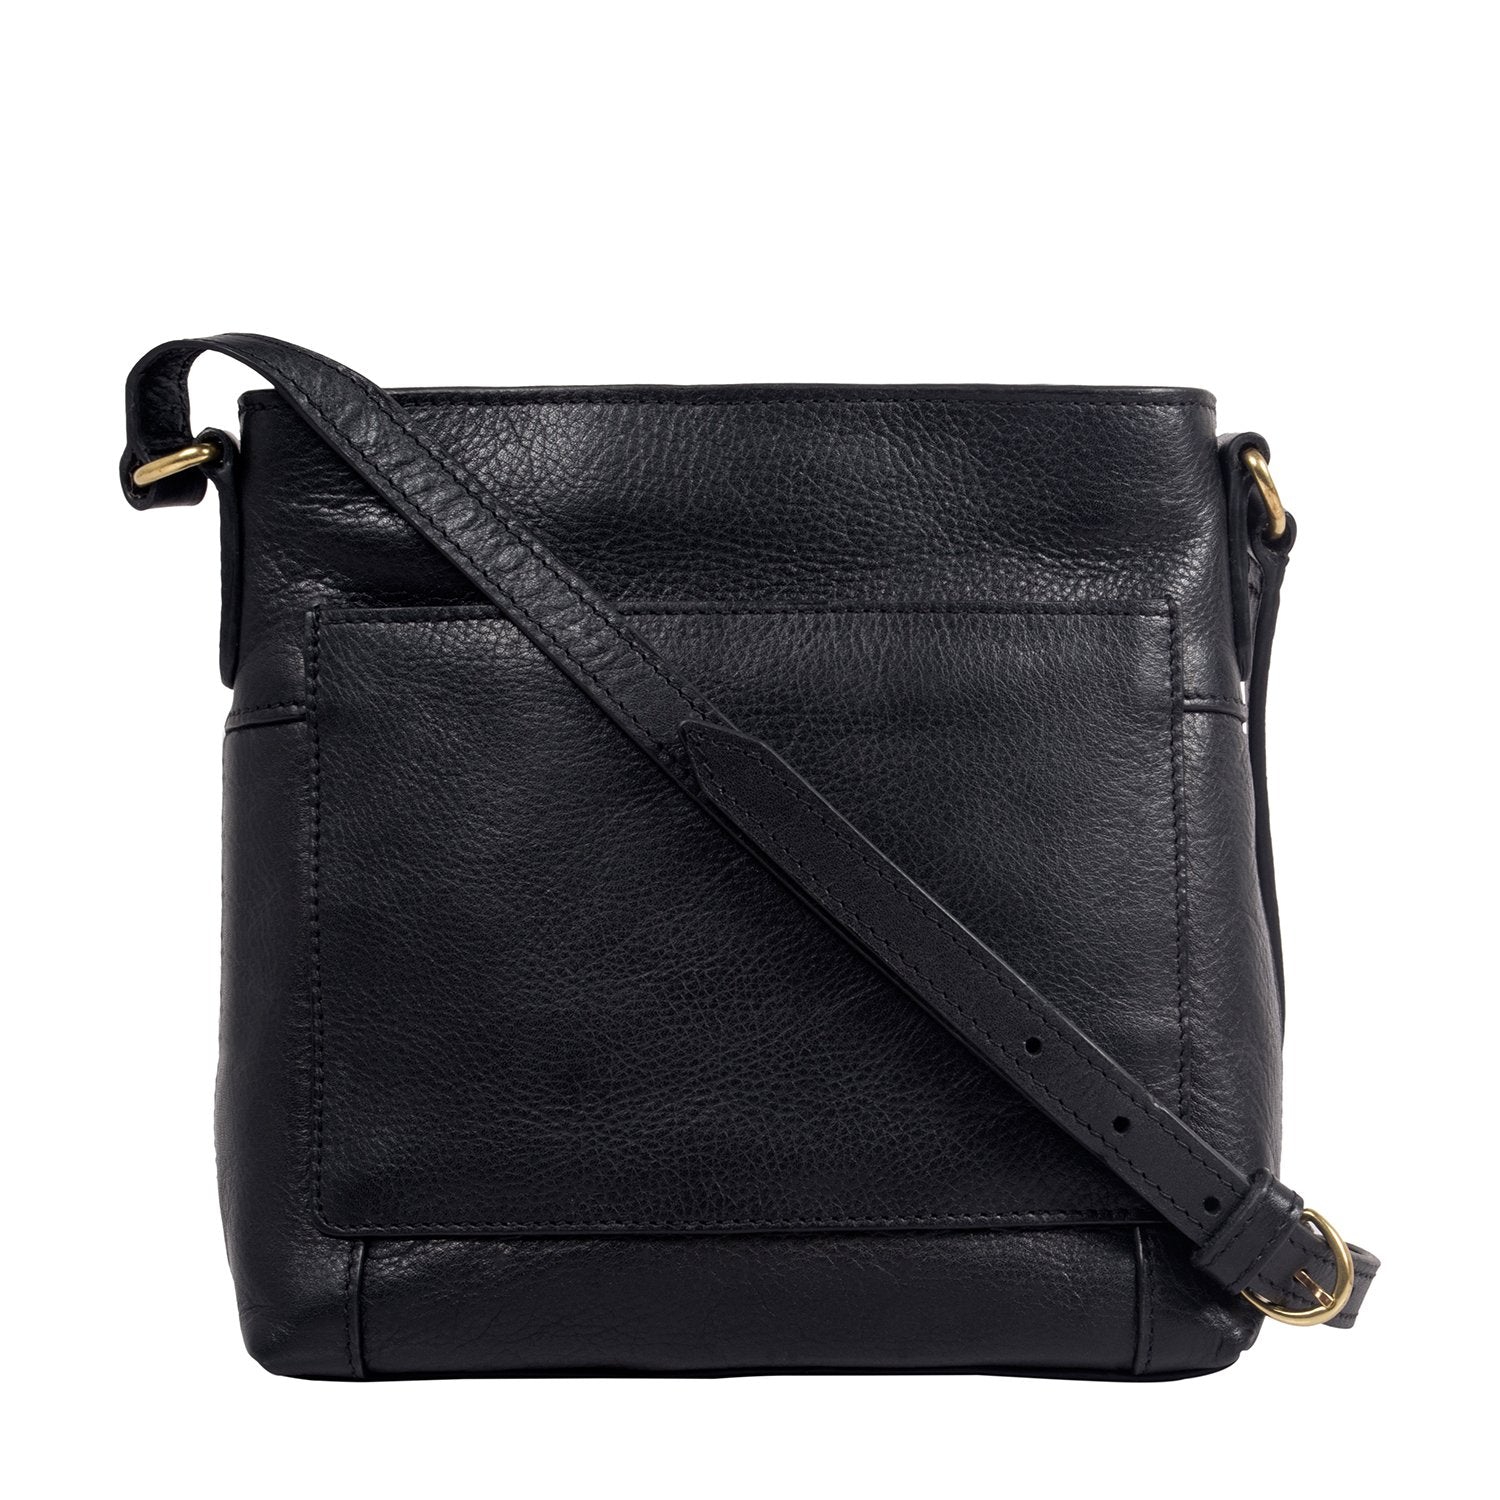  Hidesign Clara Large Genuine Leather Tote Bag/Shoulder